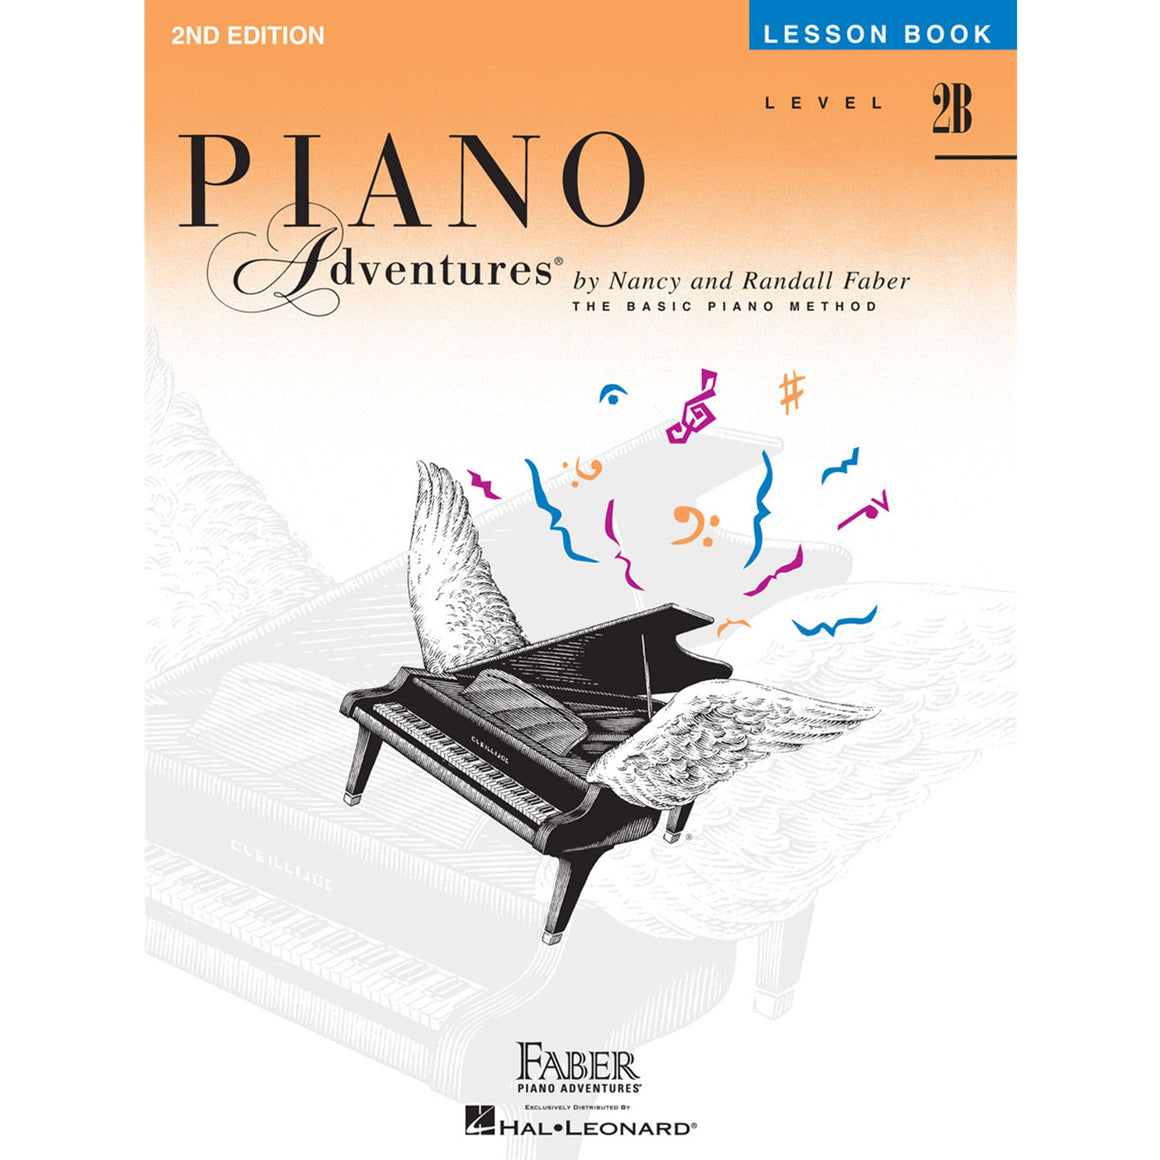 FJH PUBLISHER 420177 Piano Adventures Lesson Level 2B